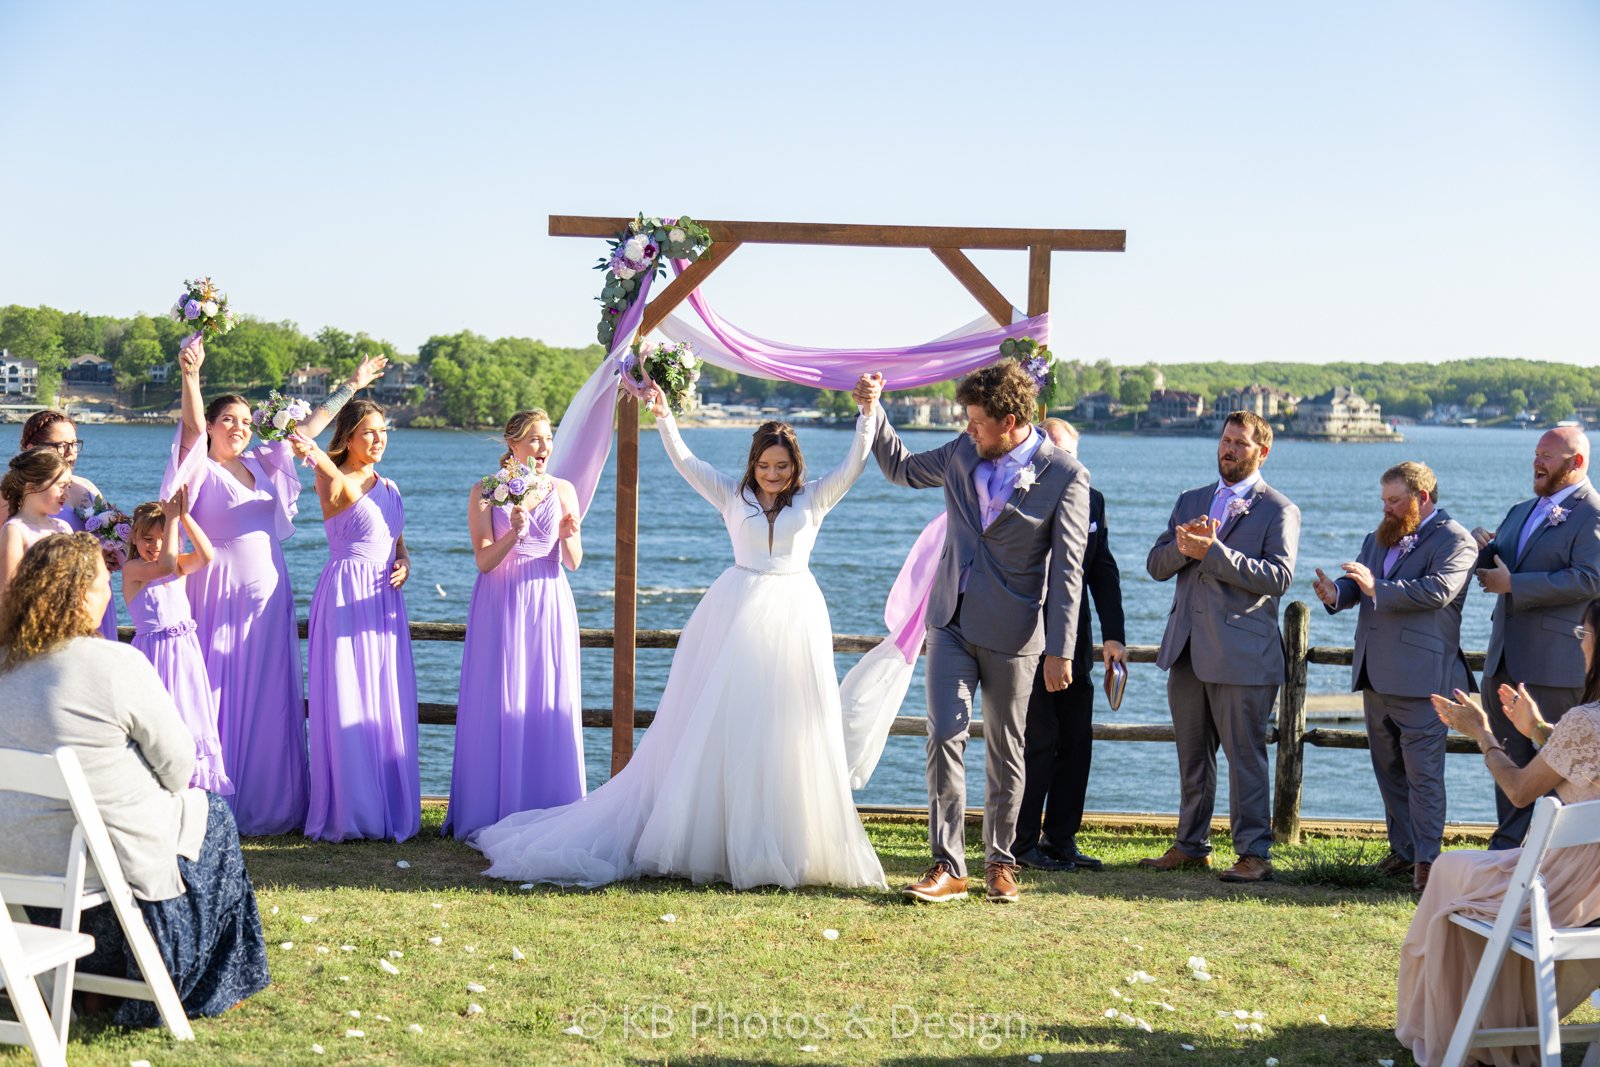 Wedding-Lanna-Brad-Lodge-of-Four-Seasons-St-Louis-STL-Lake-of-the-Ozarks-Missouri-wedding-photographer-KB-Photos-and-Design-bride-groom-photos-460.jpg